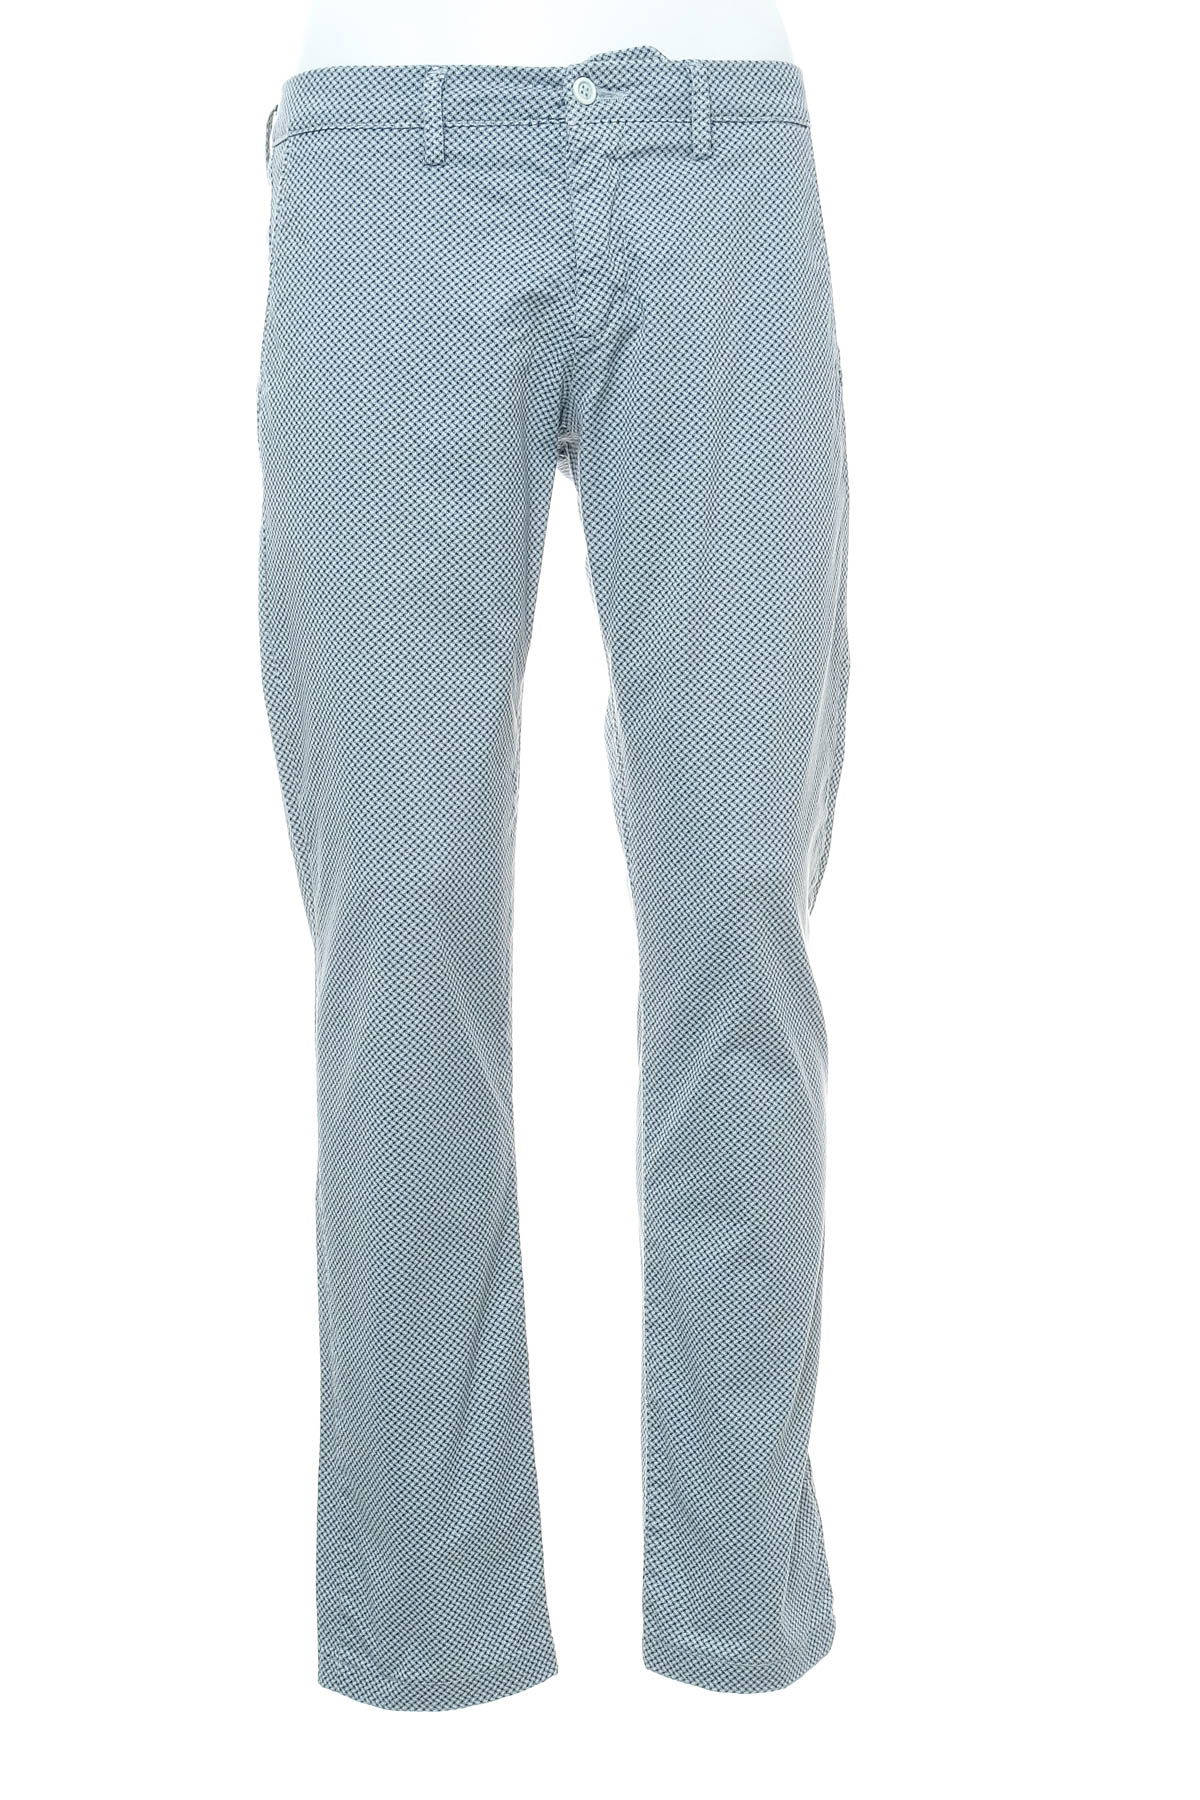 Men's trousers - SARTORIA LEONI - 0